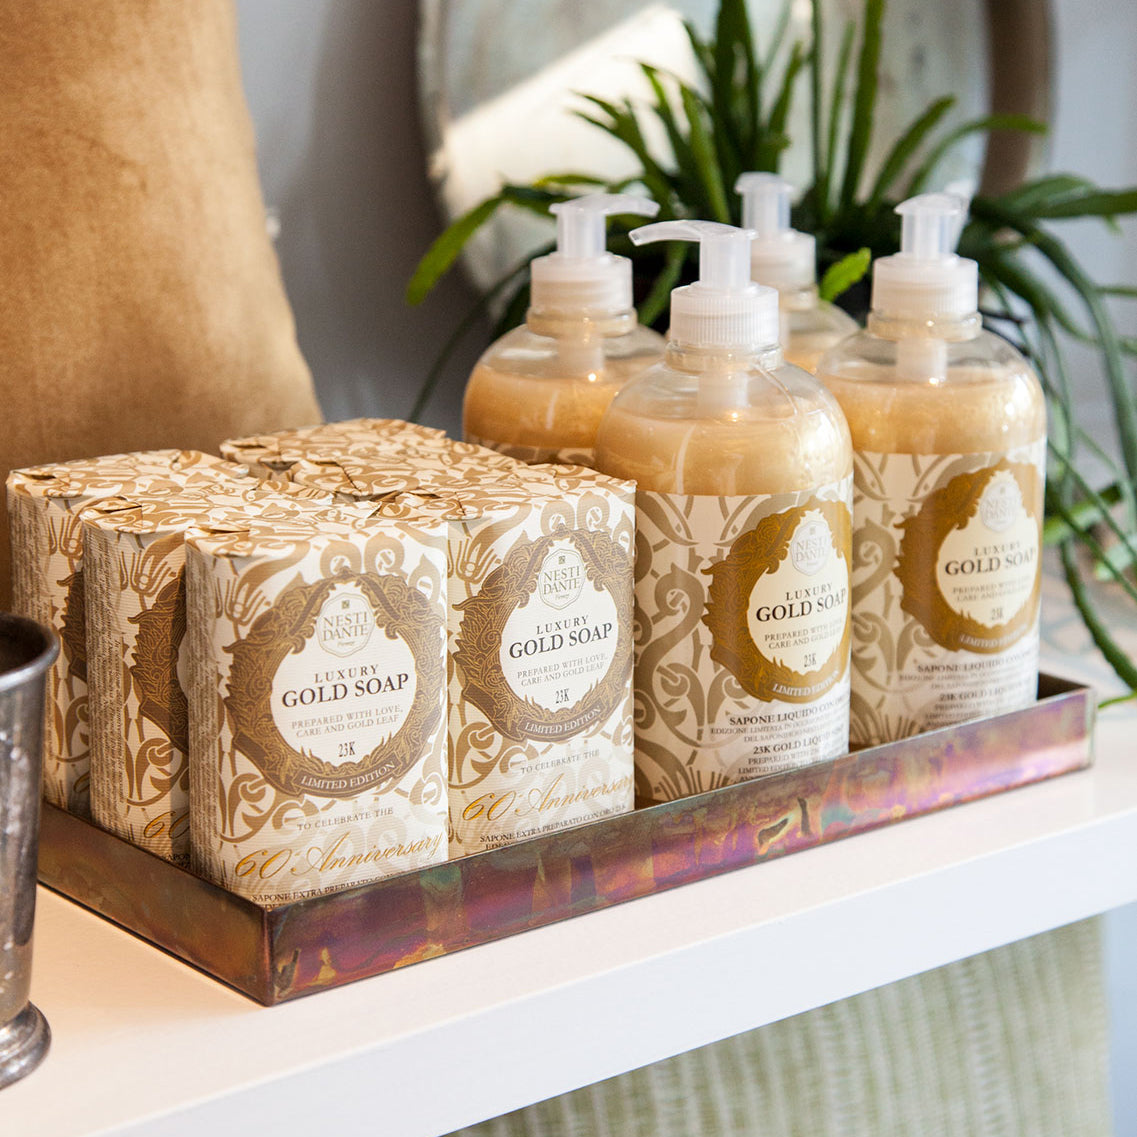 Nesti Dante Gold soap and hand wash on shelf.